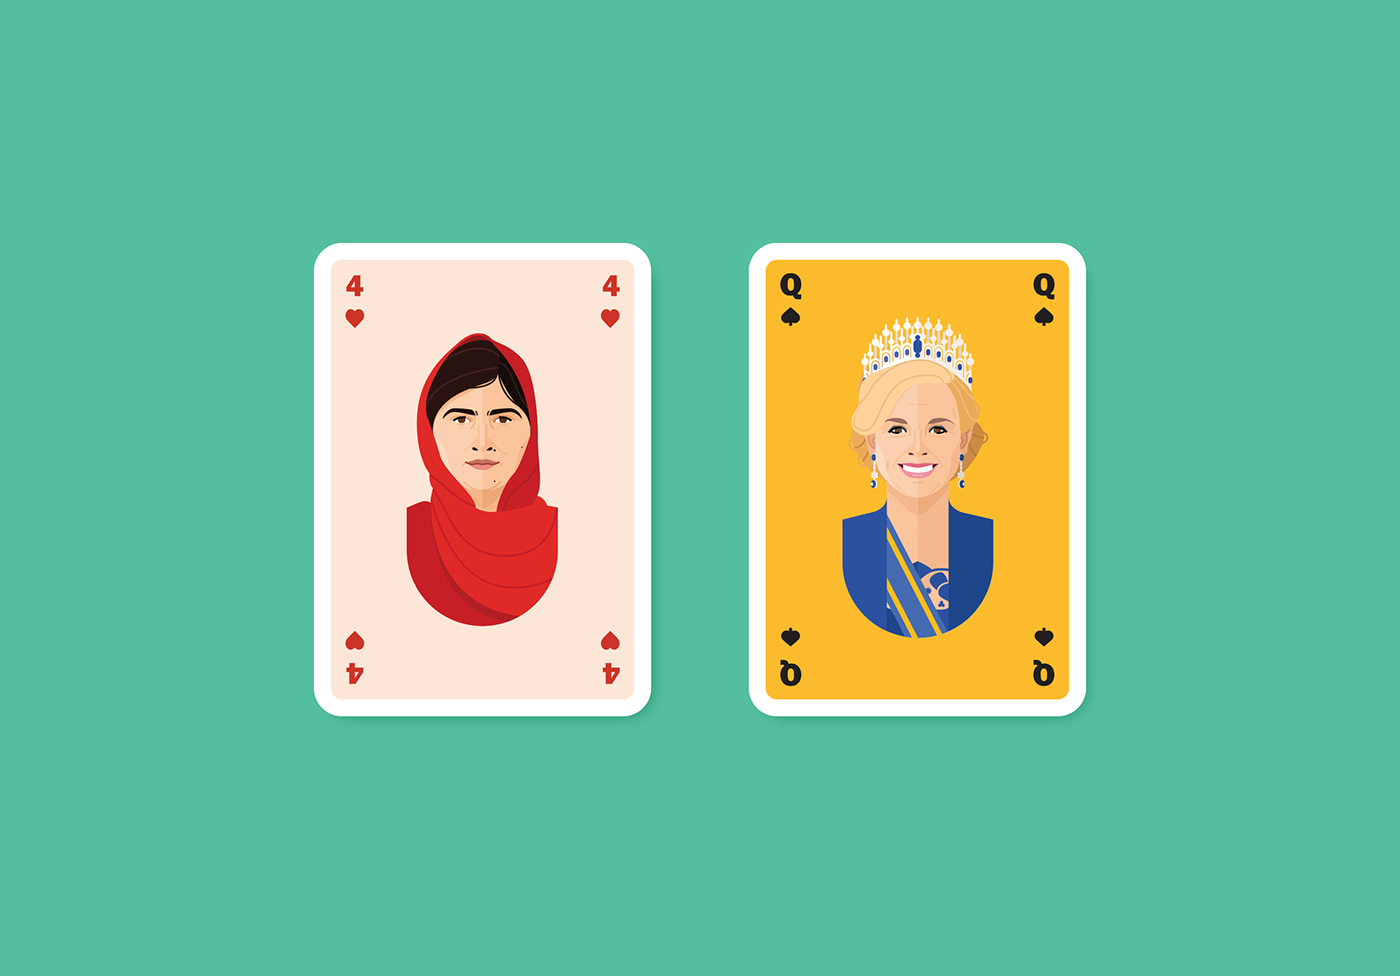 Coolclub refreshh illustrations cards cardgame women famous design deck hearts diamonds clubs spades wonderland